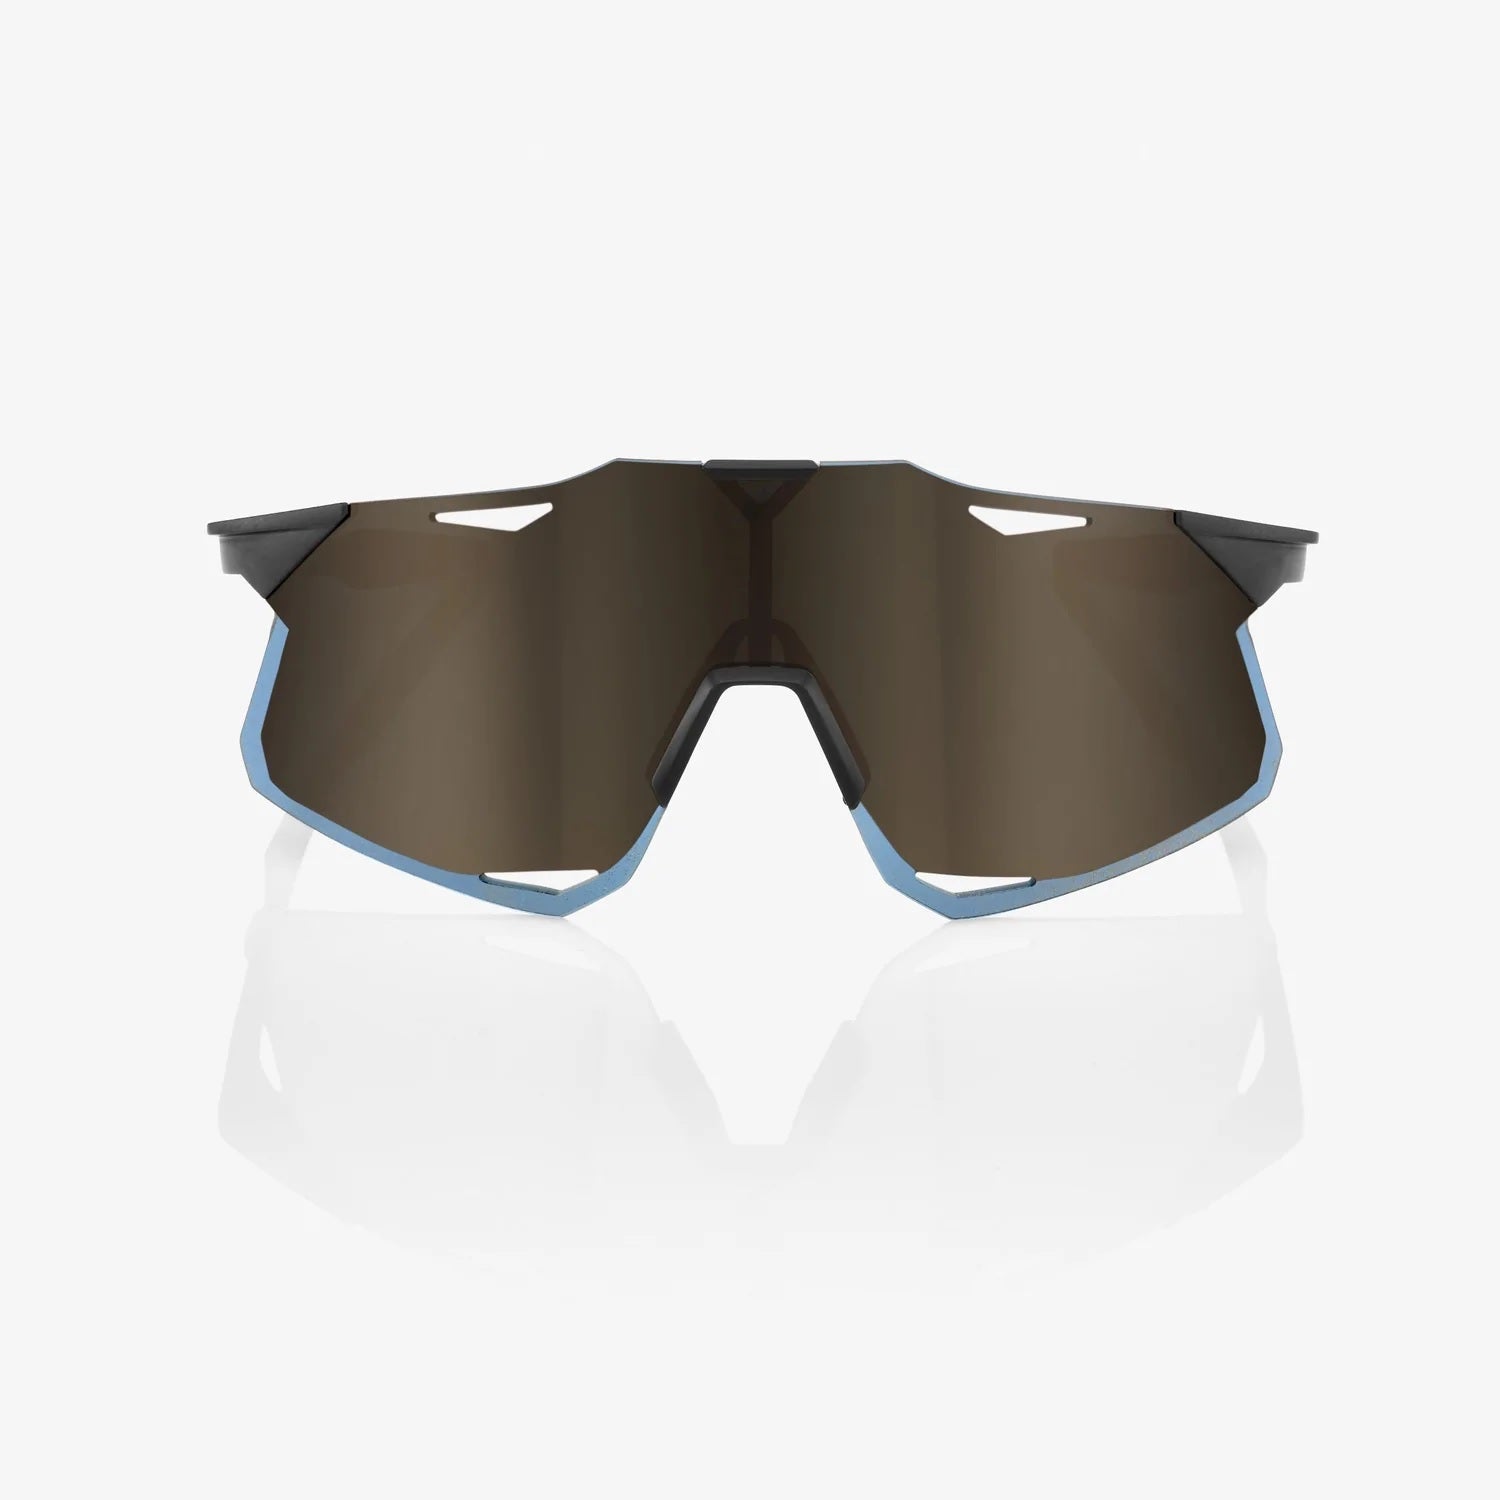 100% Hypercraft Cycling Sunglasses - MatteBlack/SoftGold